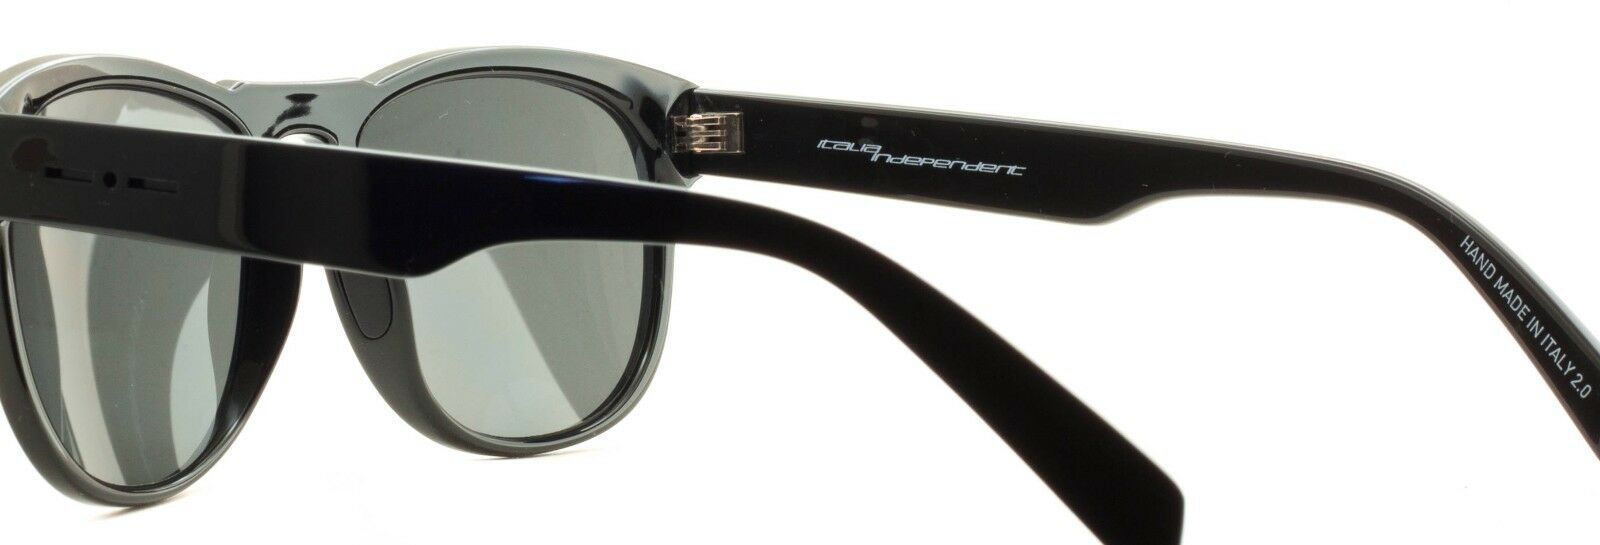 ITALIA INDEPENDENT 0902 009 GLS Sunglasses Shades Frames Eyeglasses New - Italy